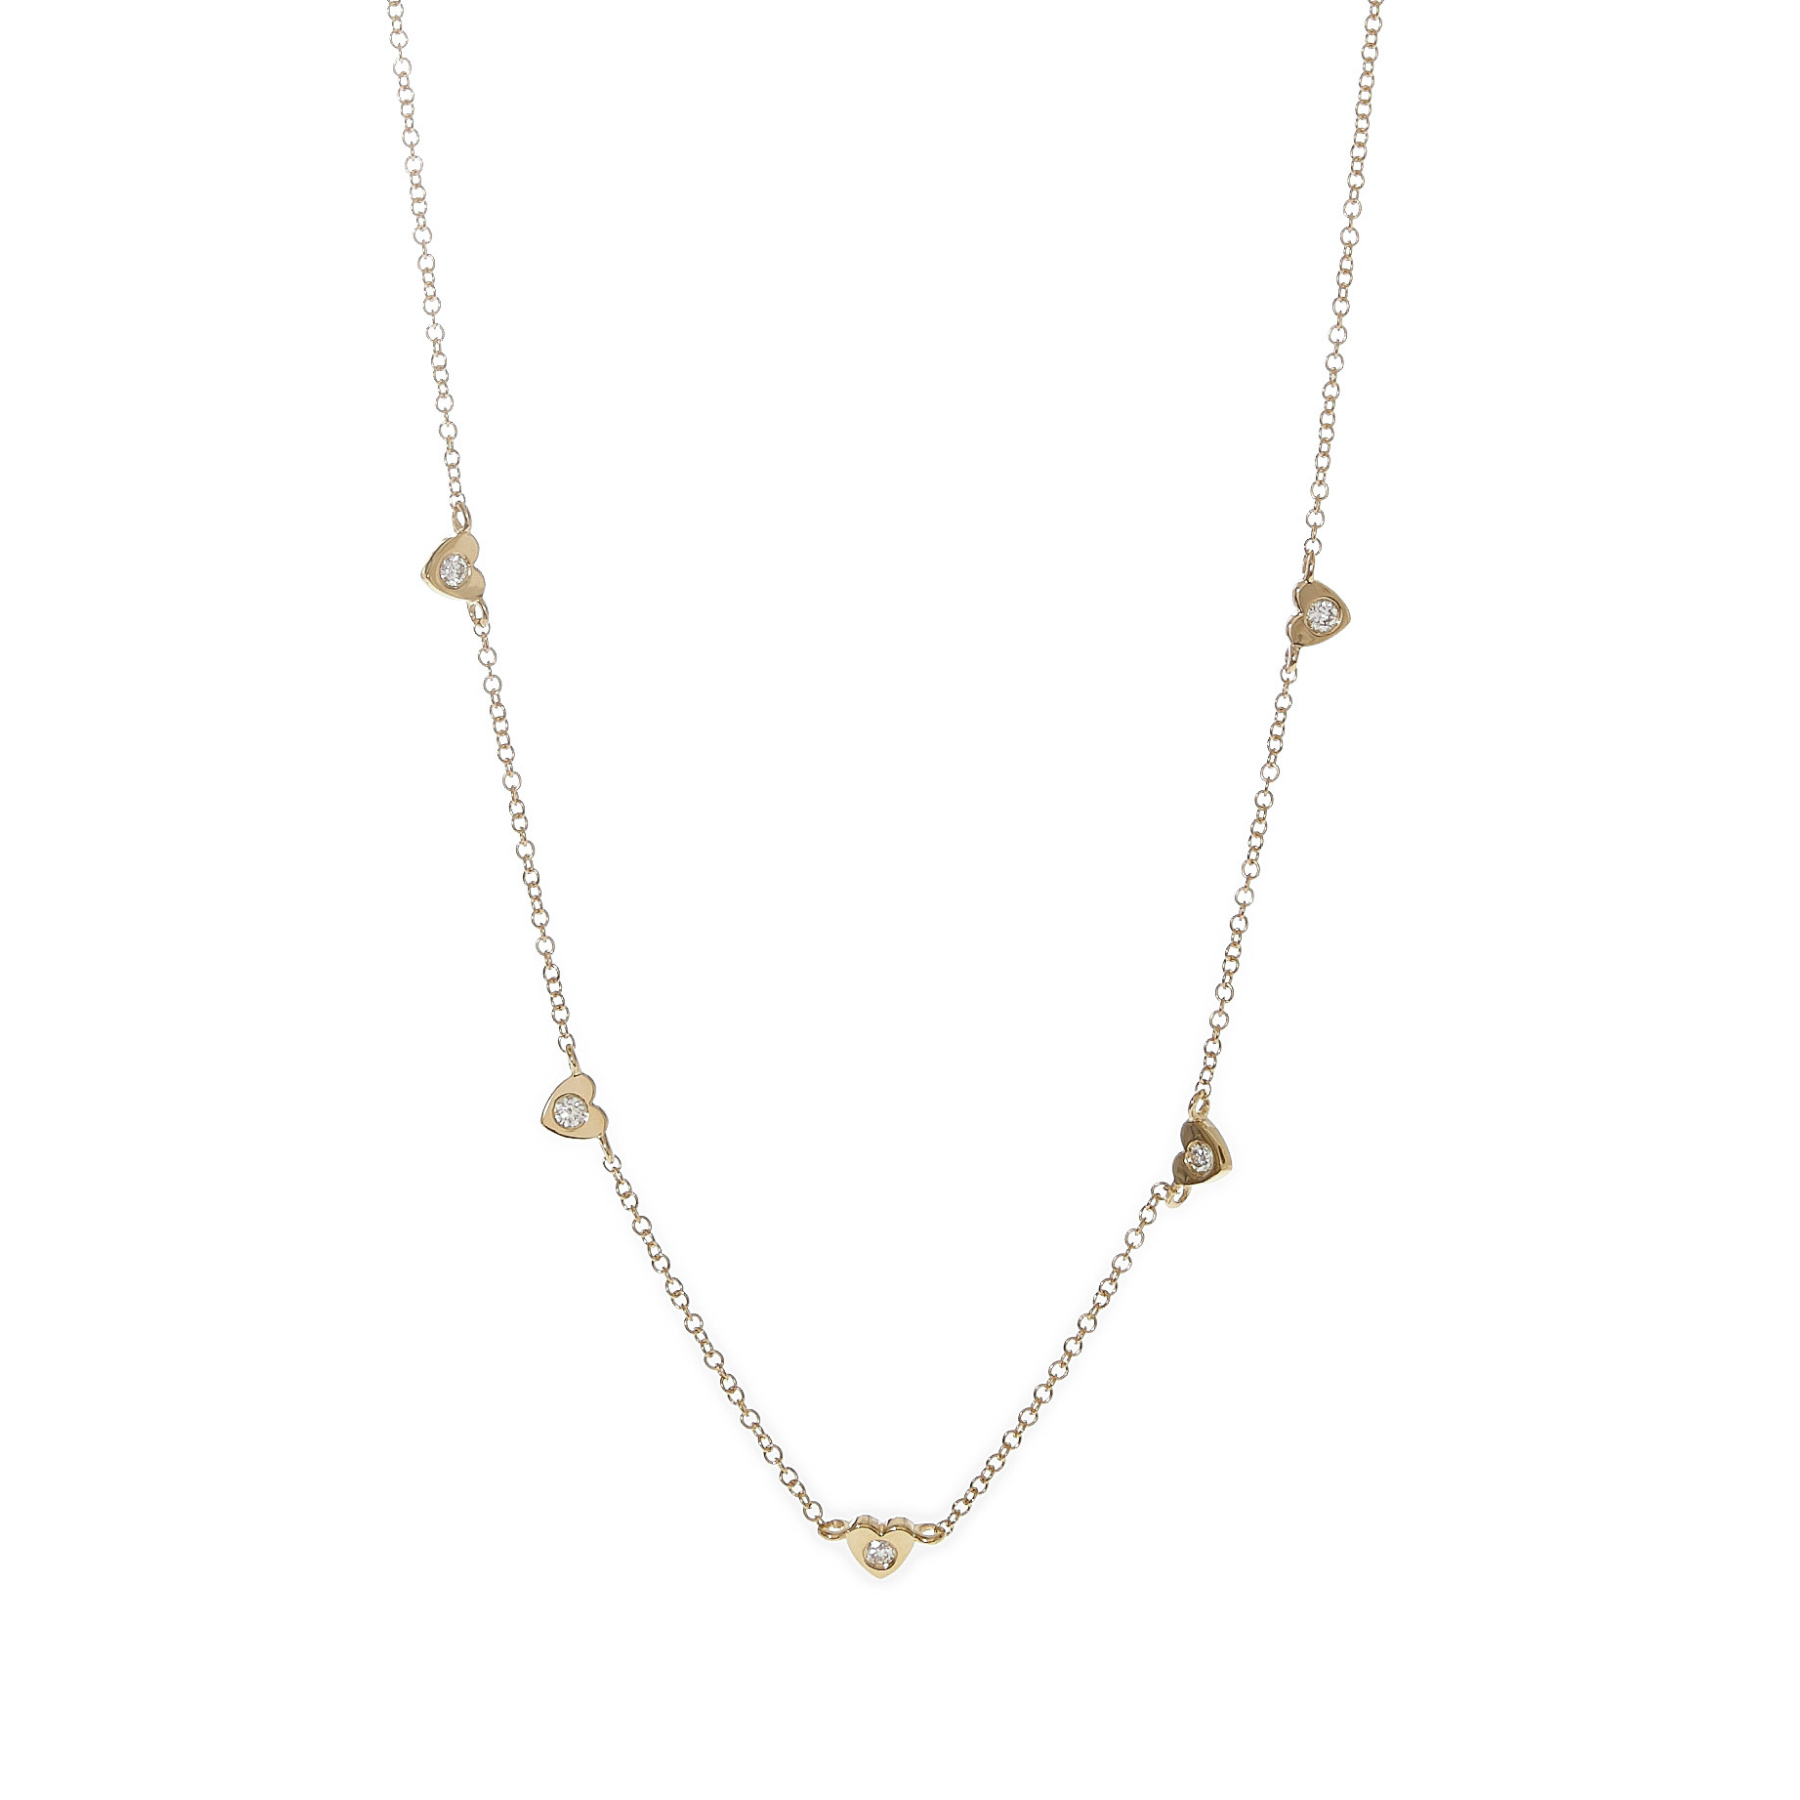 Lisa Yang Jewelry : DIY Beaded Heart Frame Necklace Pendant